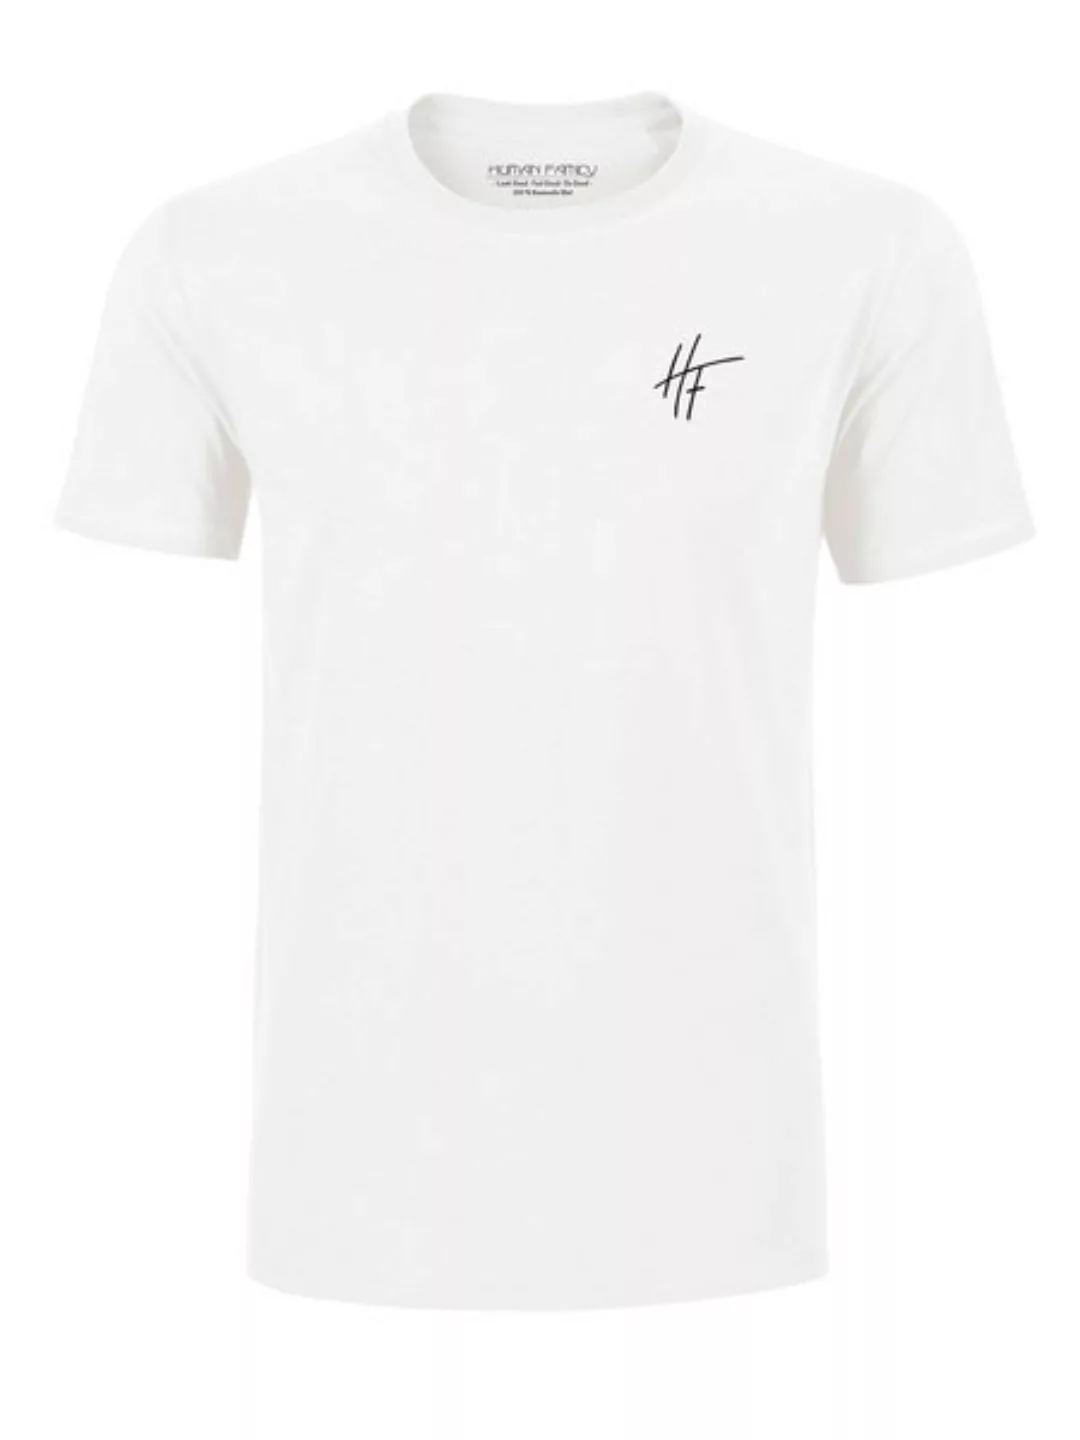 Man T-shirt - Join "Little Branding" günstig online kaufen